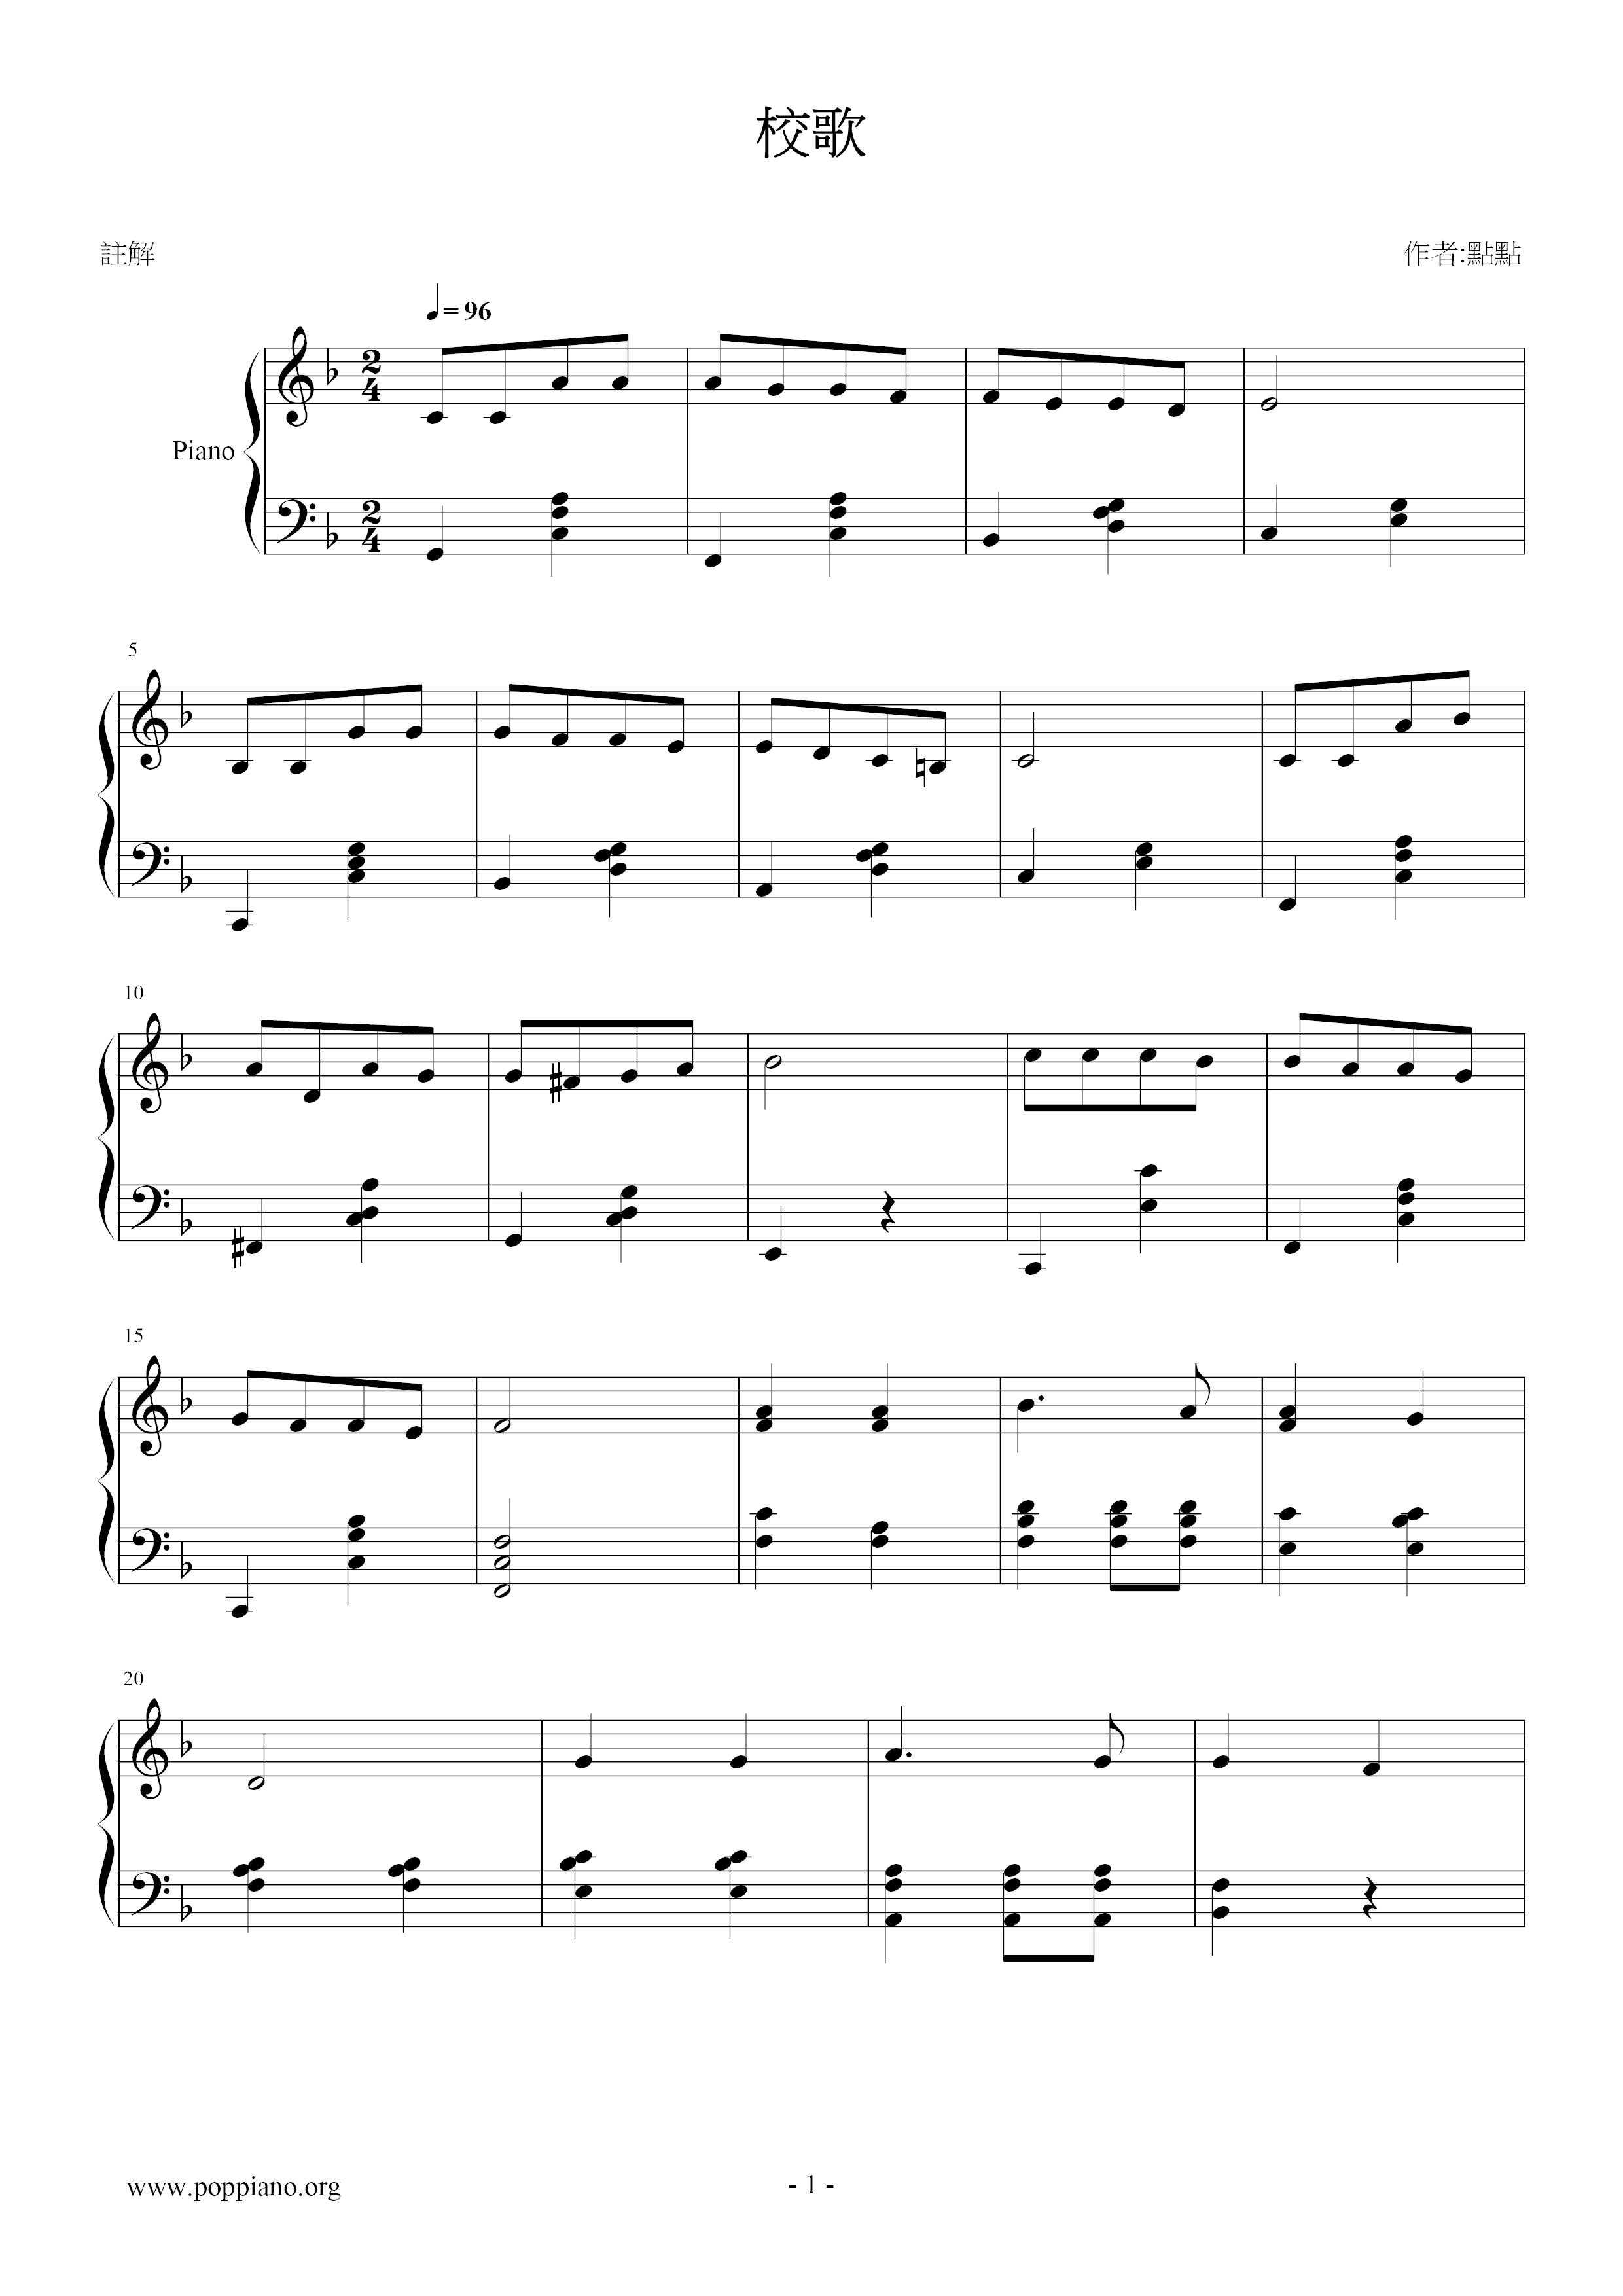 Hu Hanhui Middle School Song Score